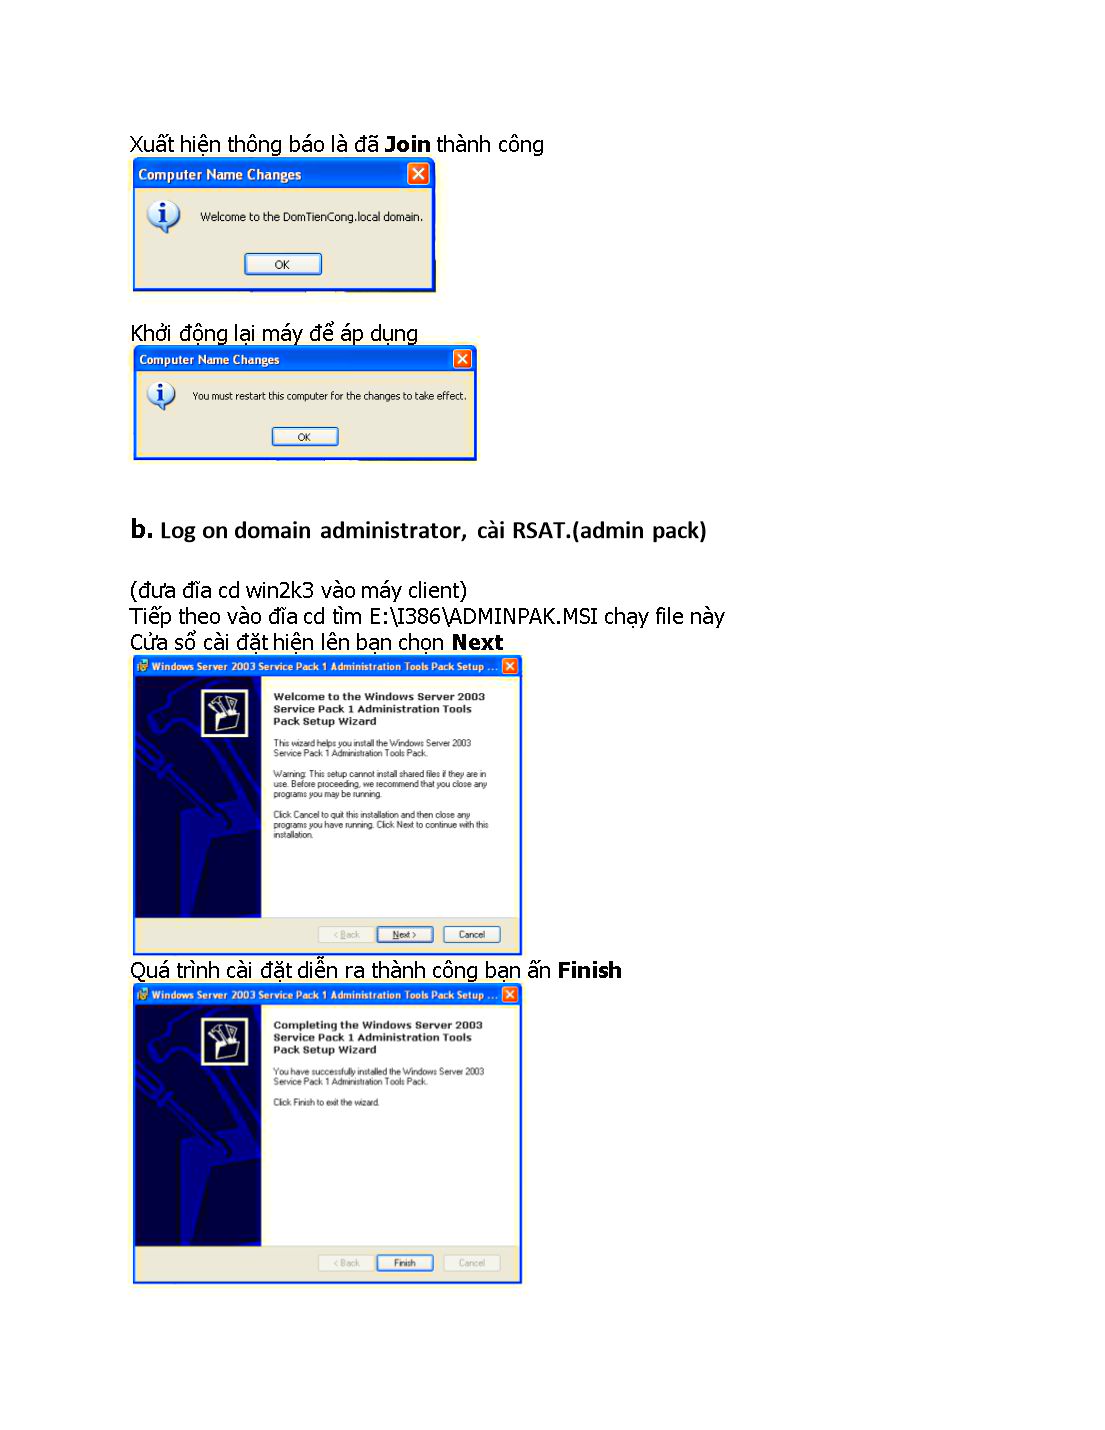 Đề tài Lap Windows server 2003 trang 10